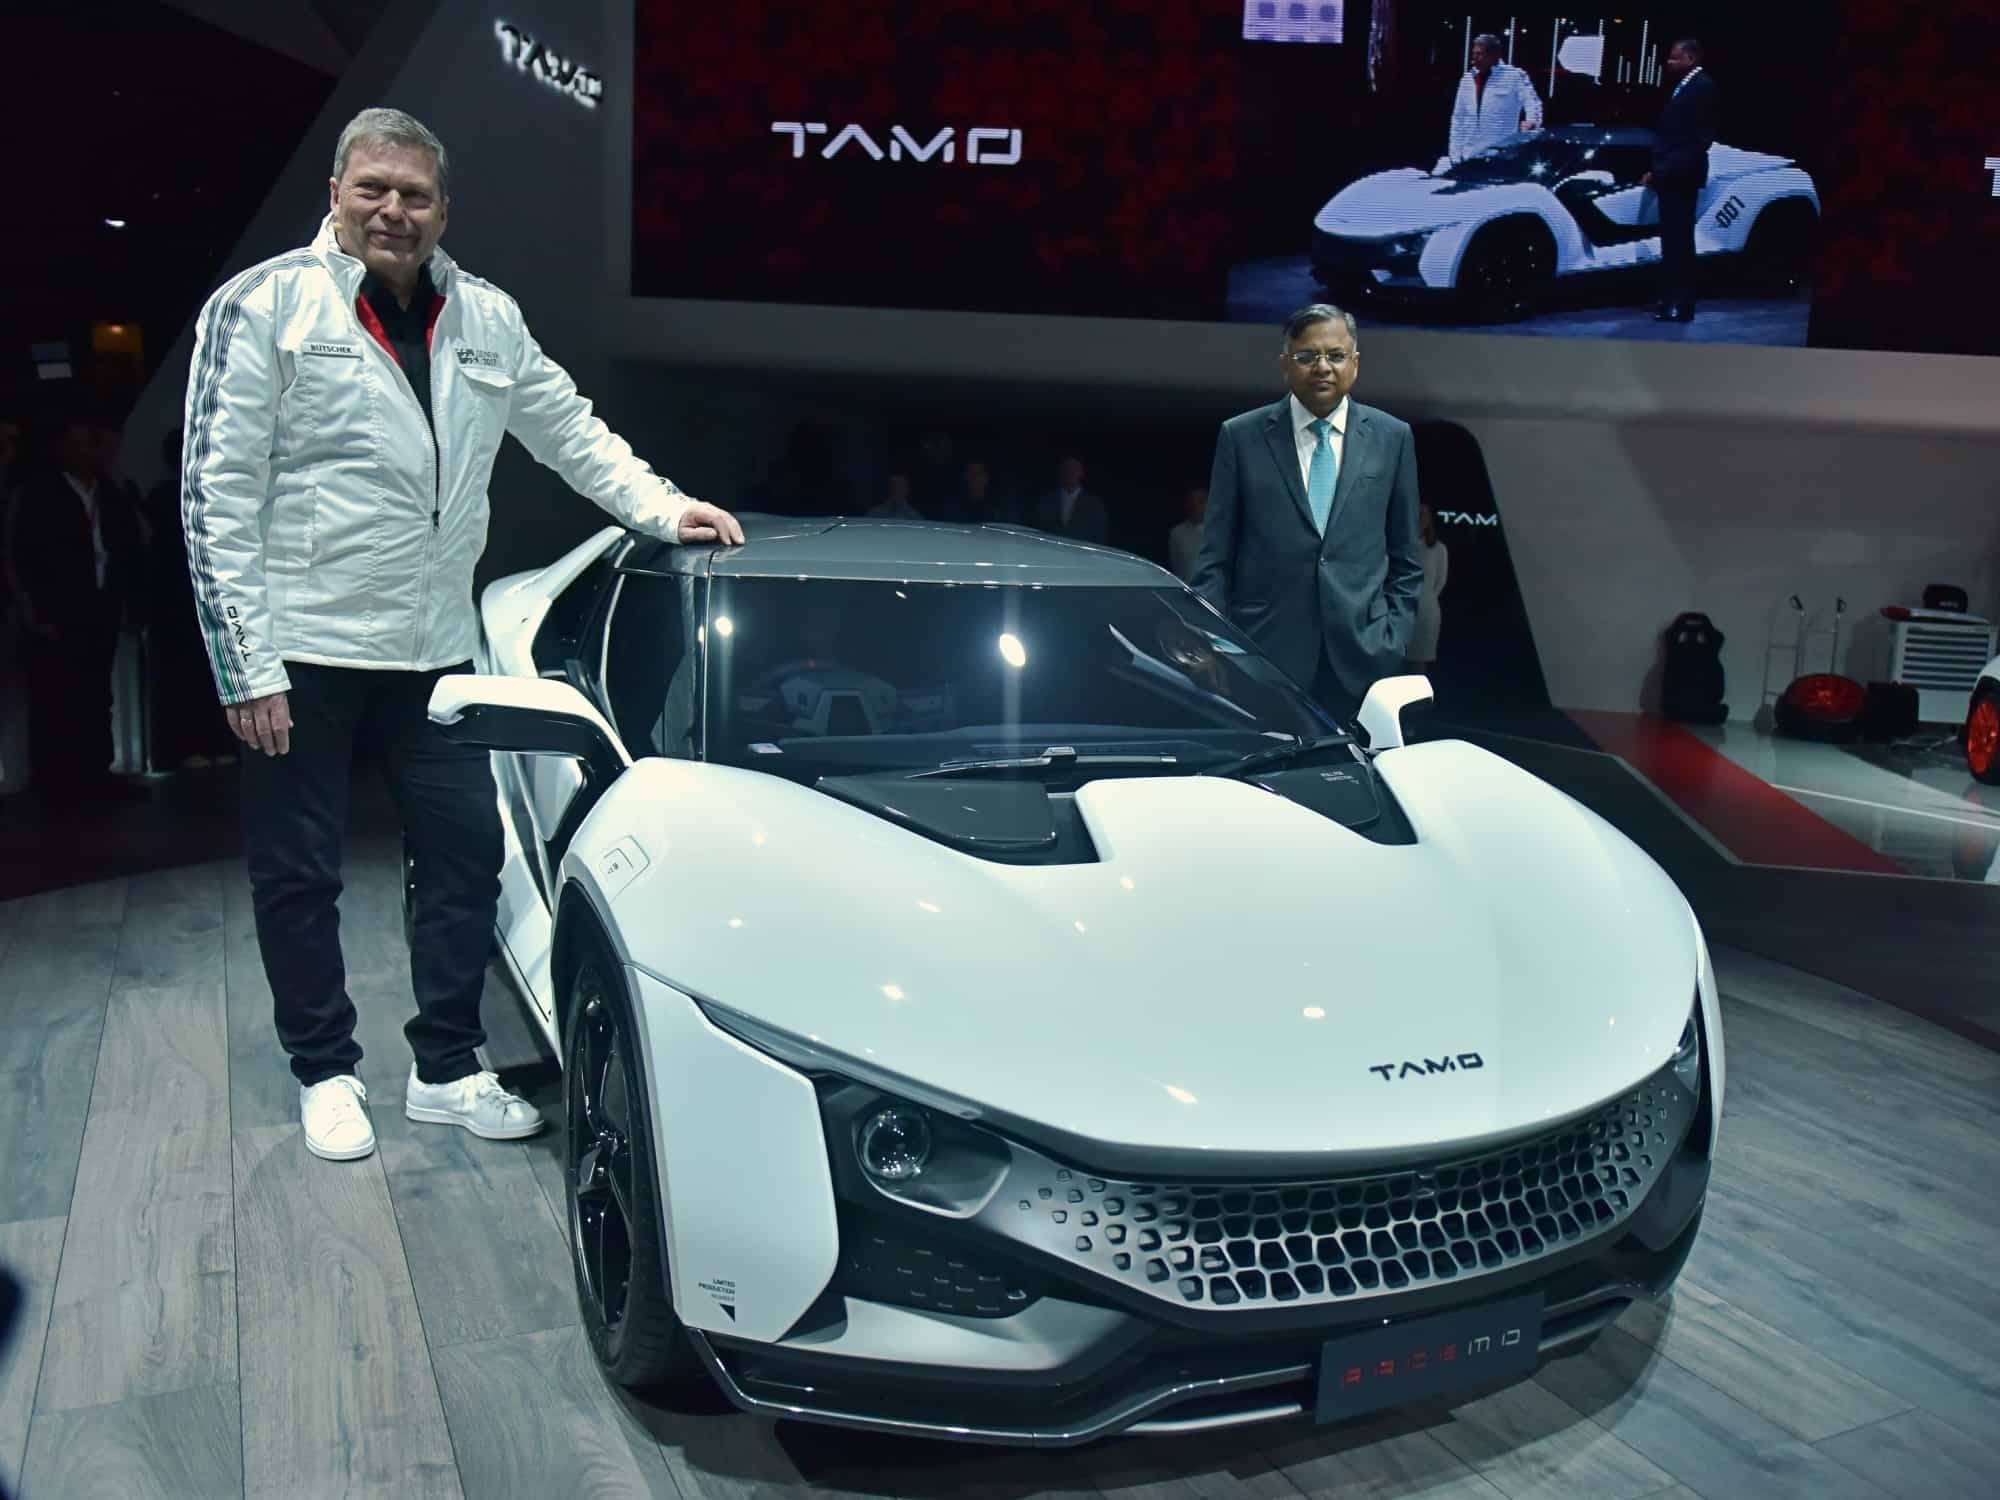 Tata's sub brand Tamo unveiling company's first sportscar - RACEMO at the Geneva International Motor Show in Geneva. 